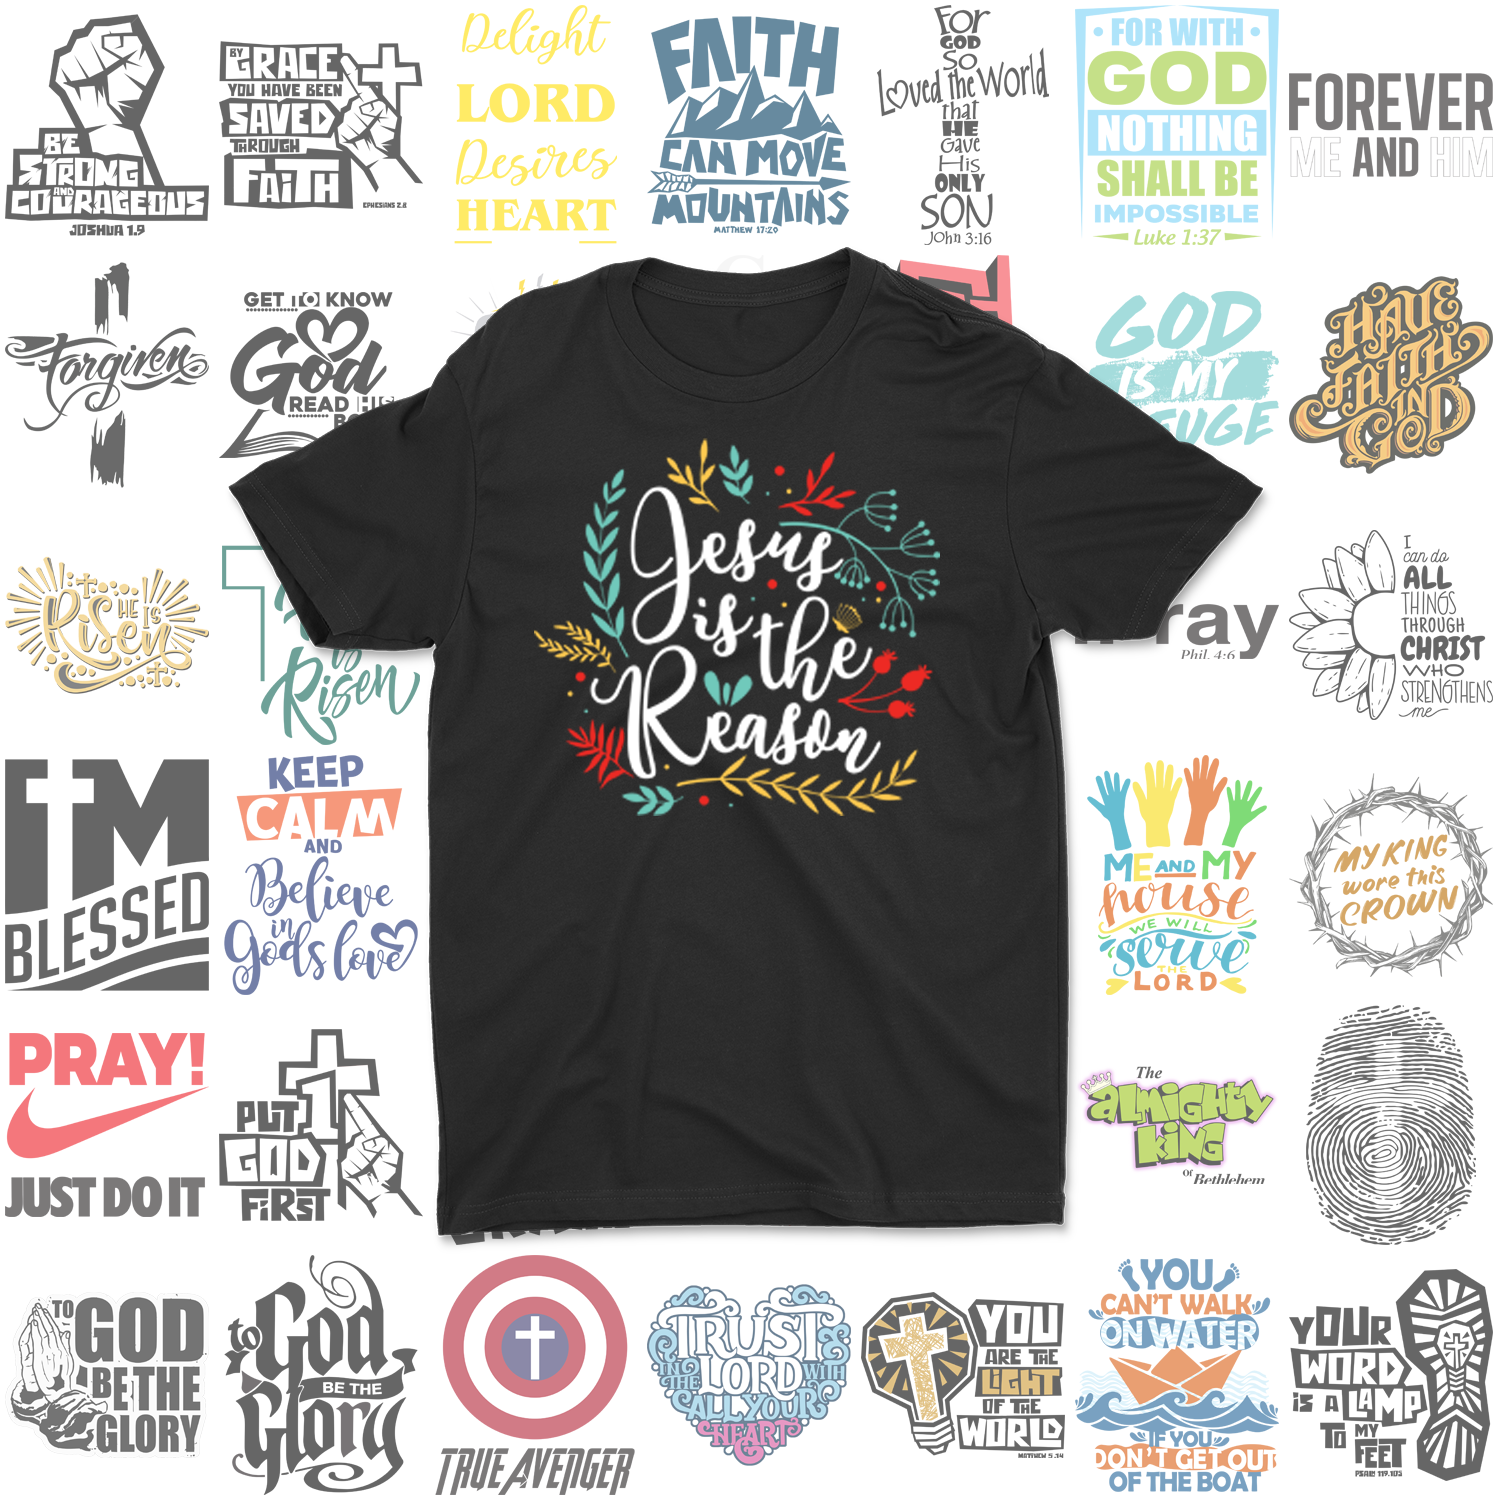 Gospel Design T-Shirt Collection